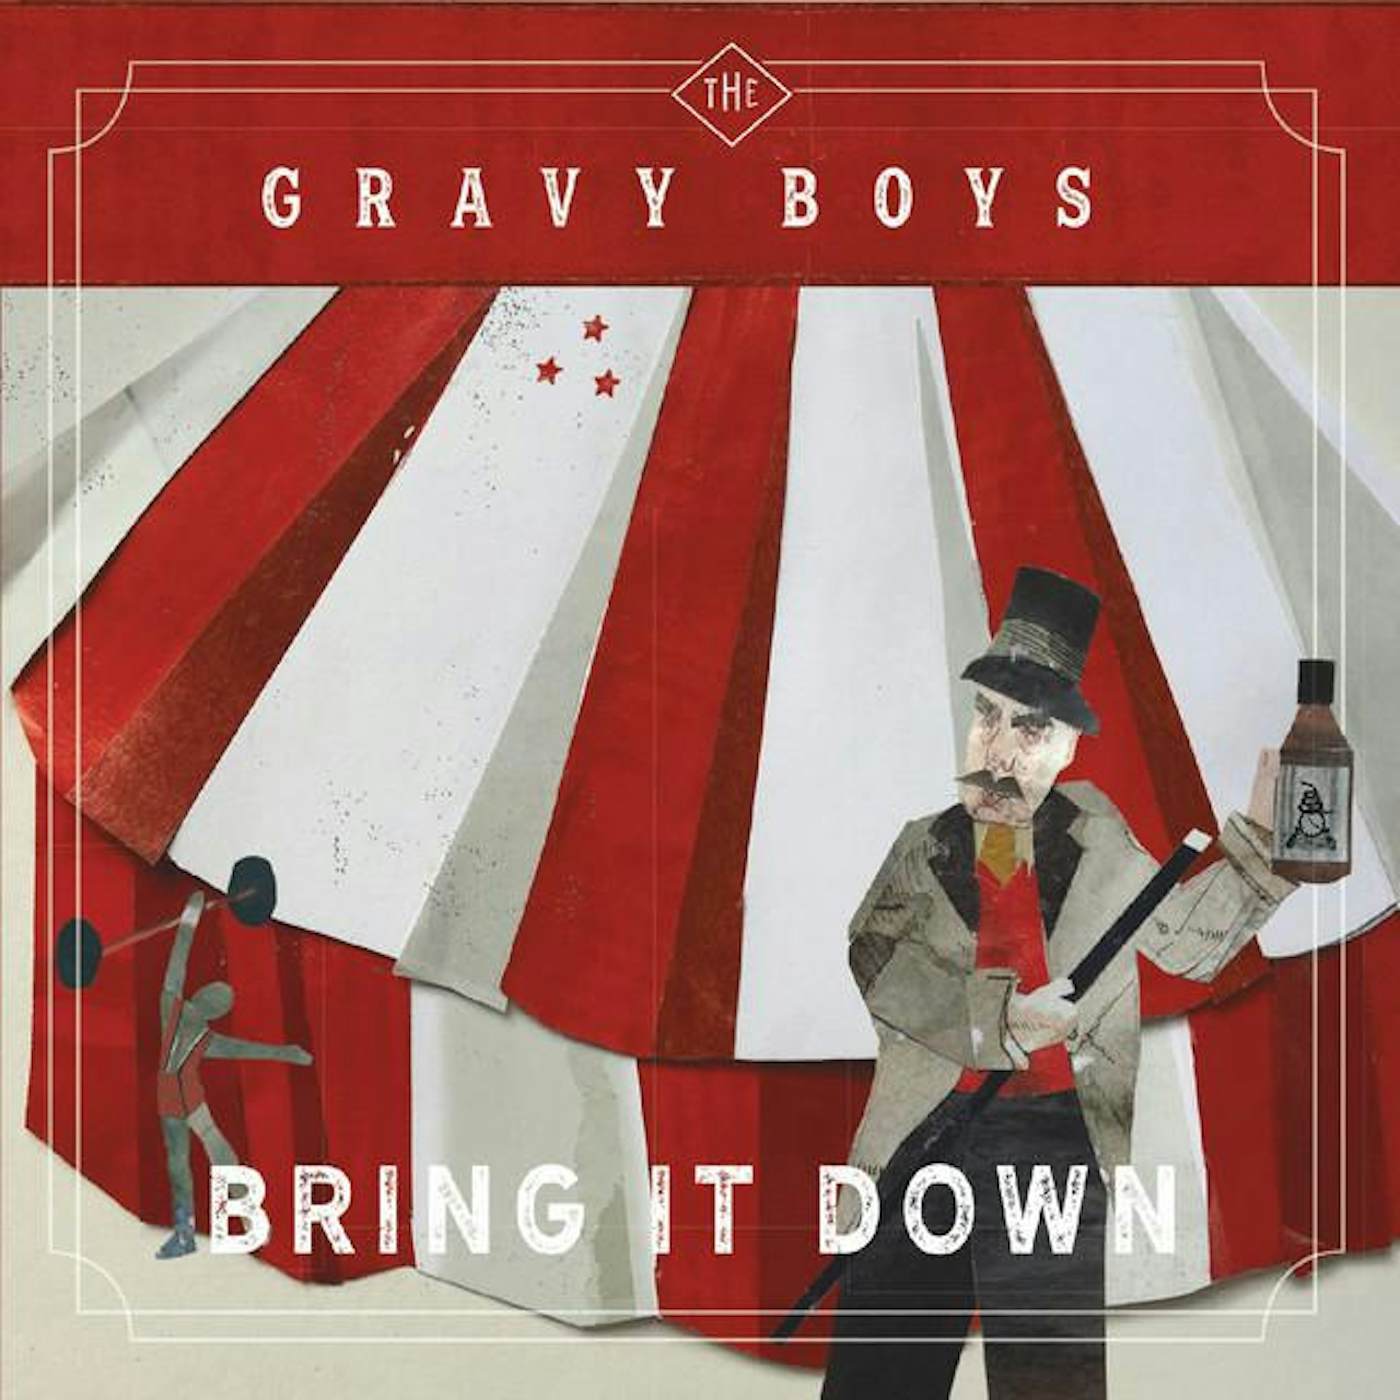 The Gravy Boys